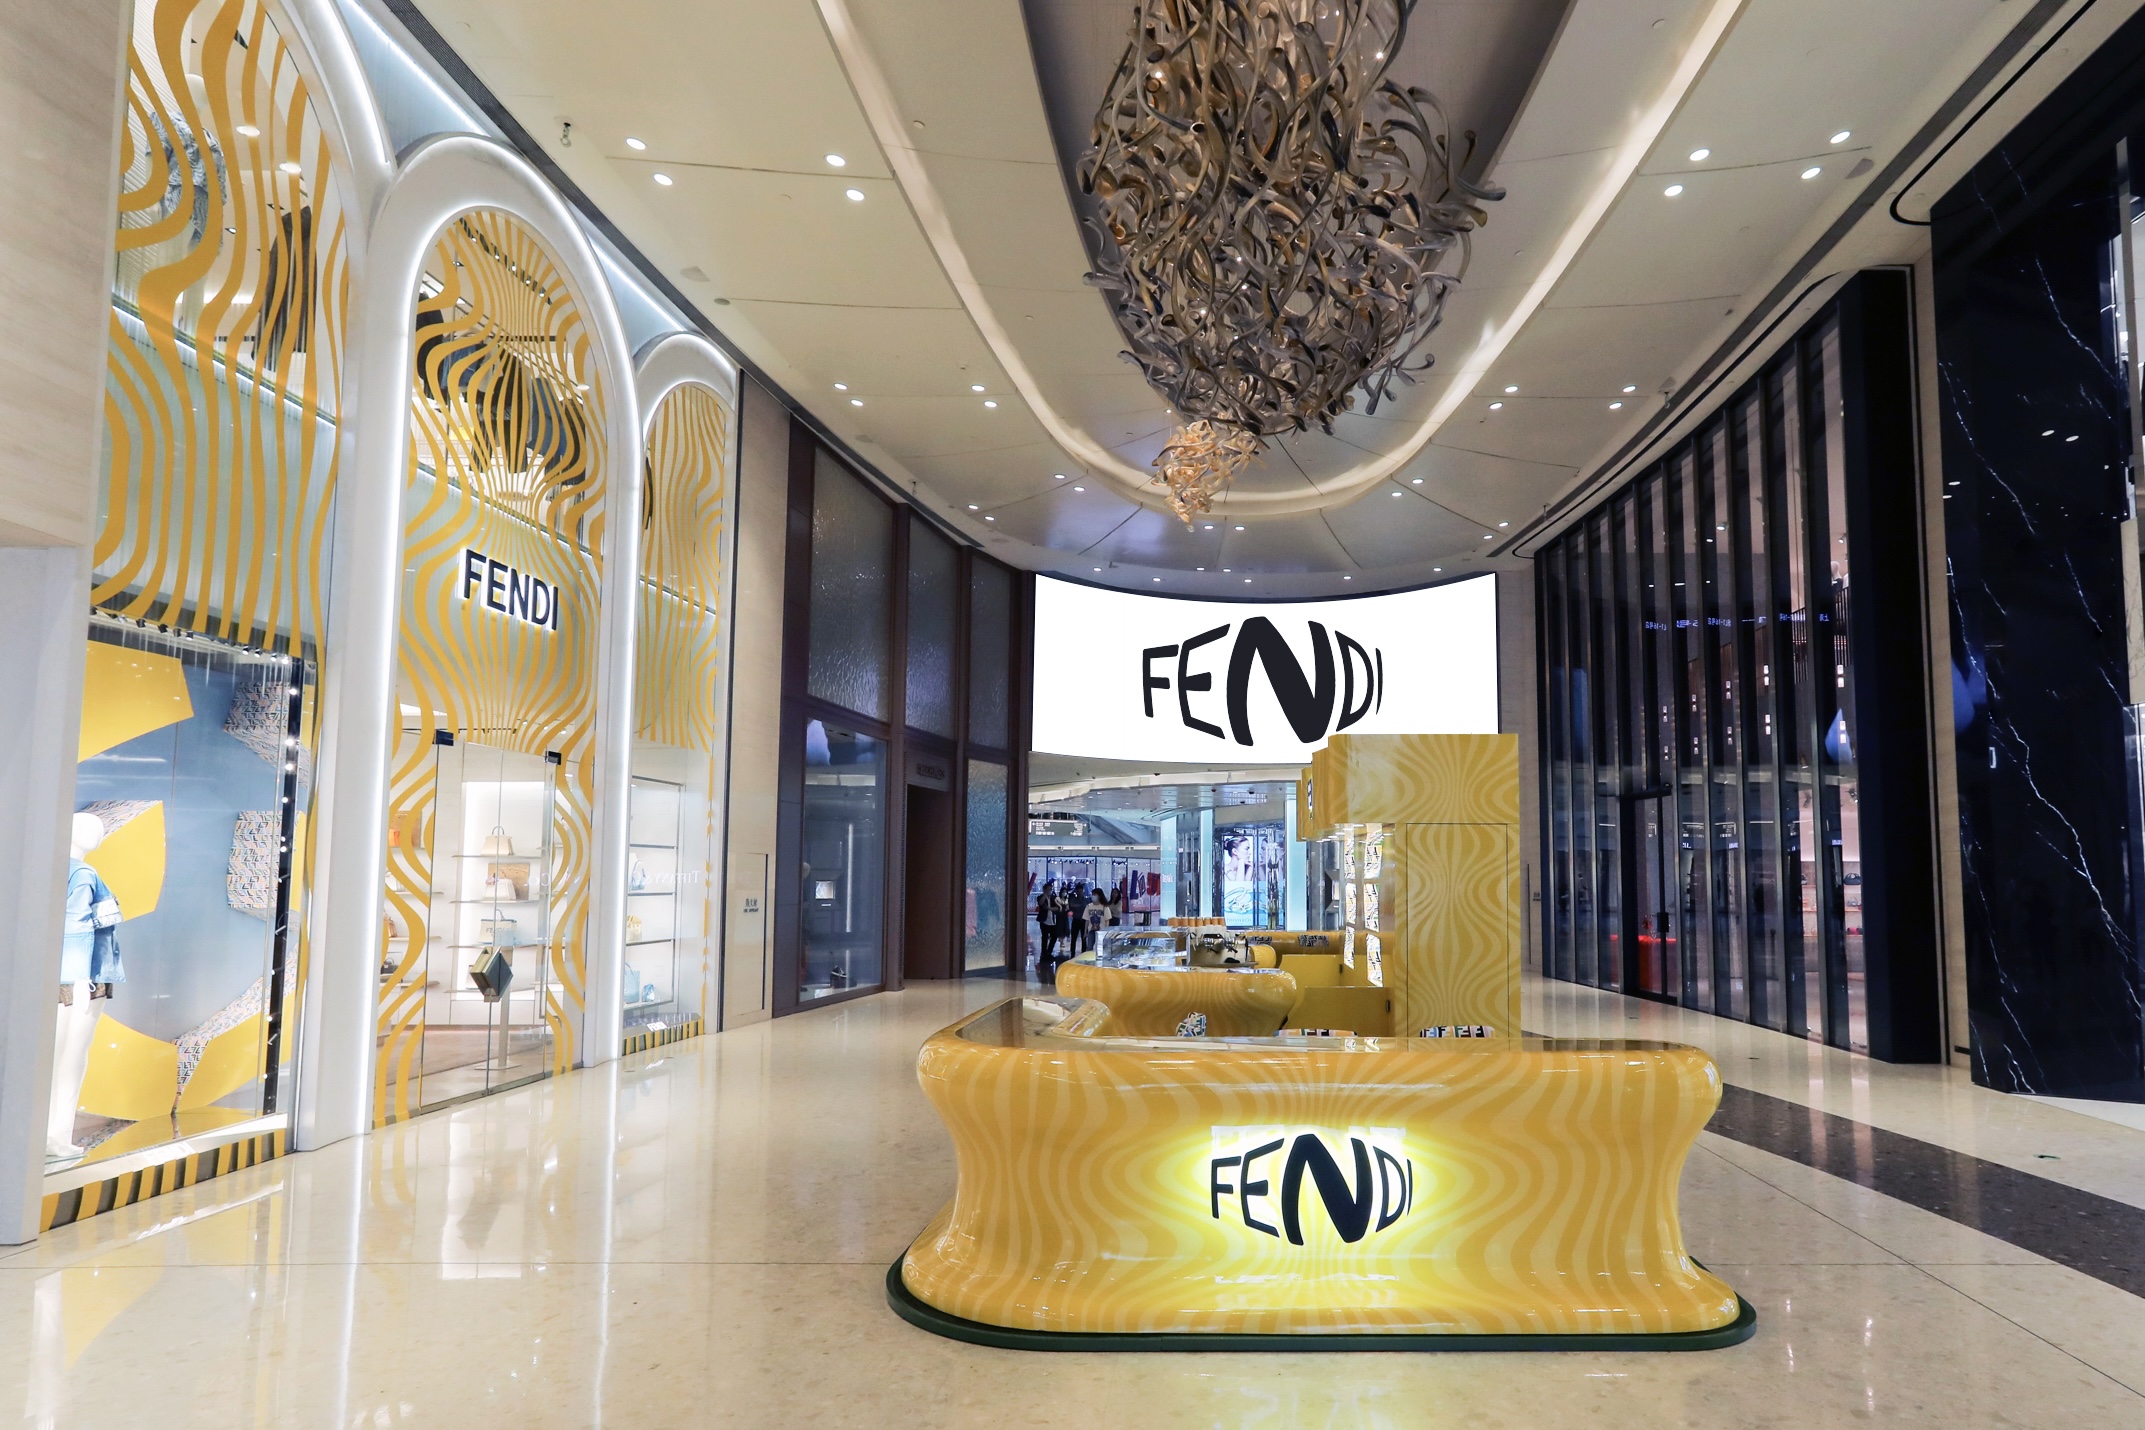 Lady M 携手 FENDI 呈献「FENDI CAFFE」限时体验空间